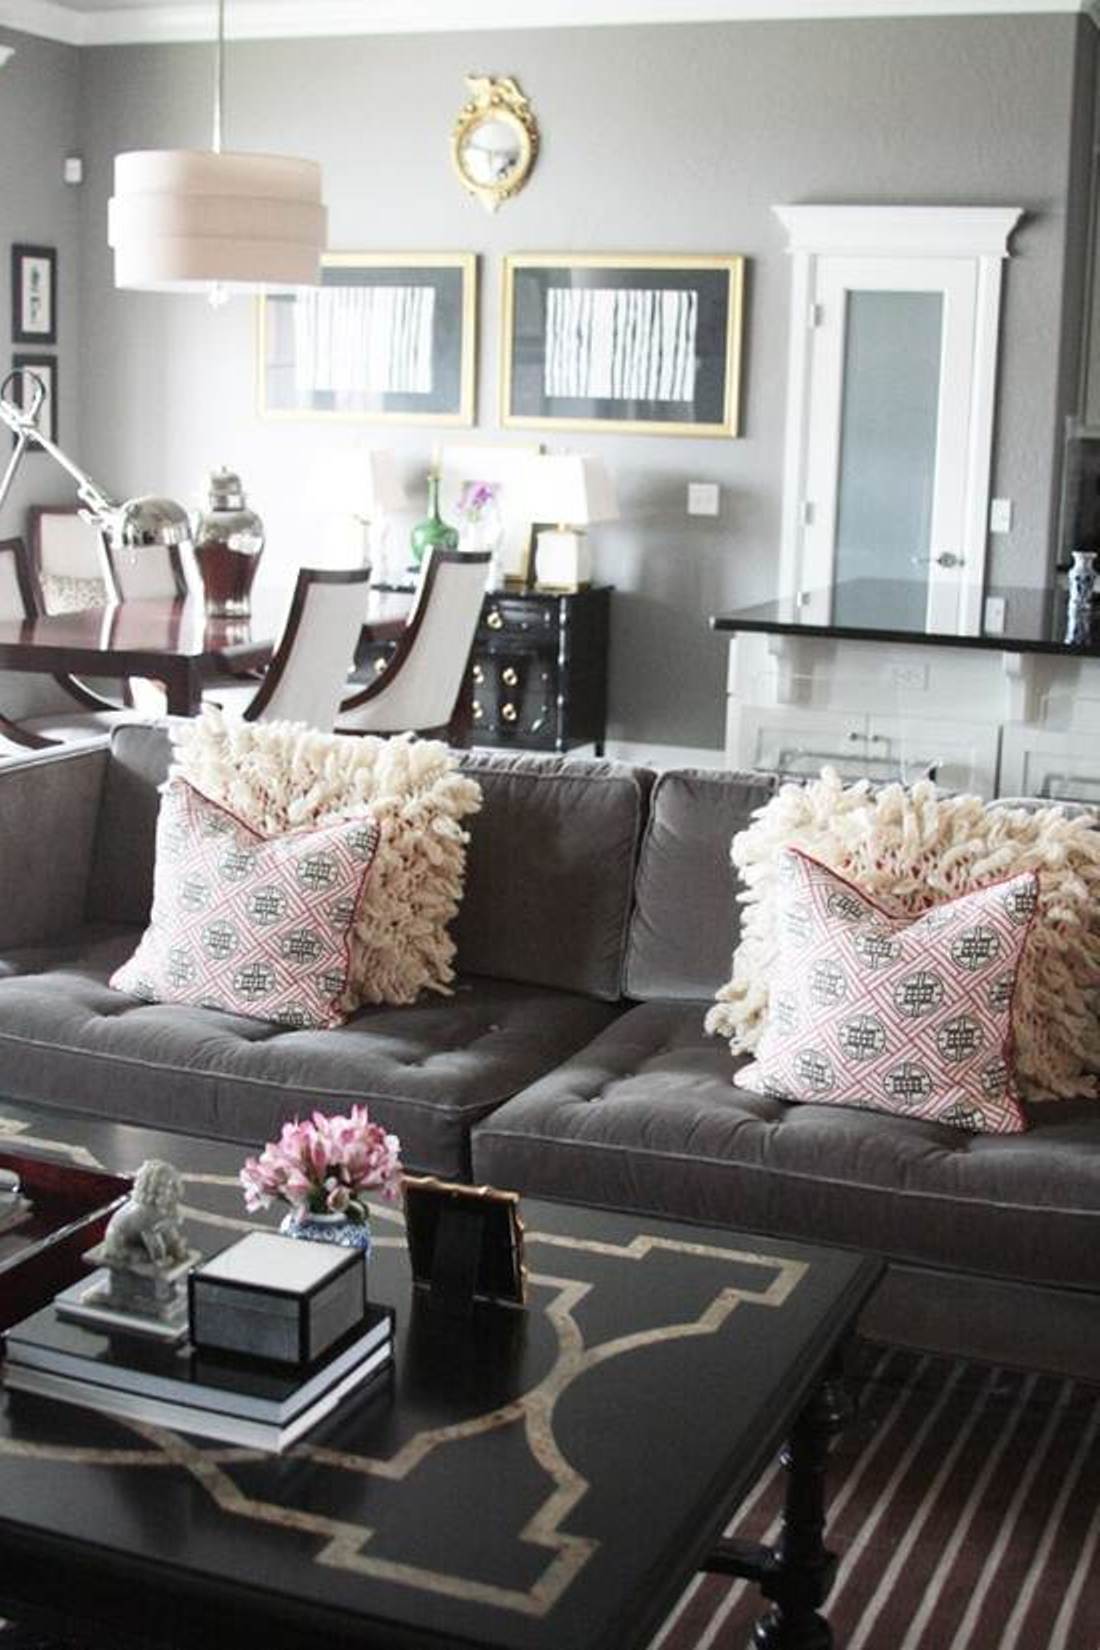 25 Gray Living Room Design Ideas - Decoration Love